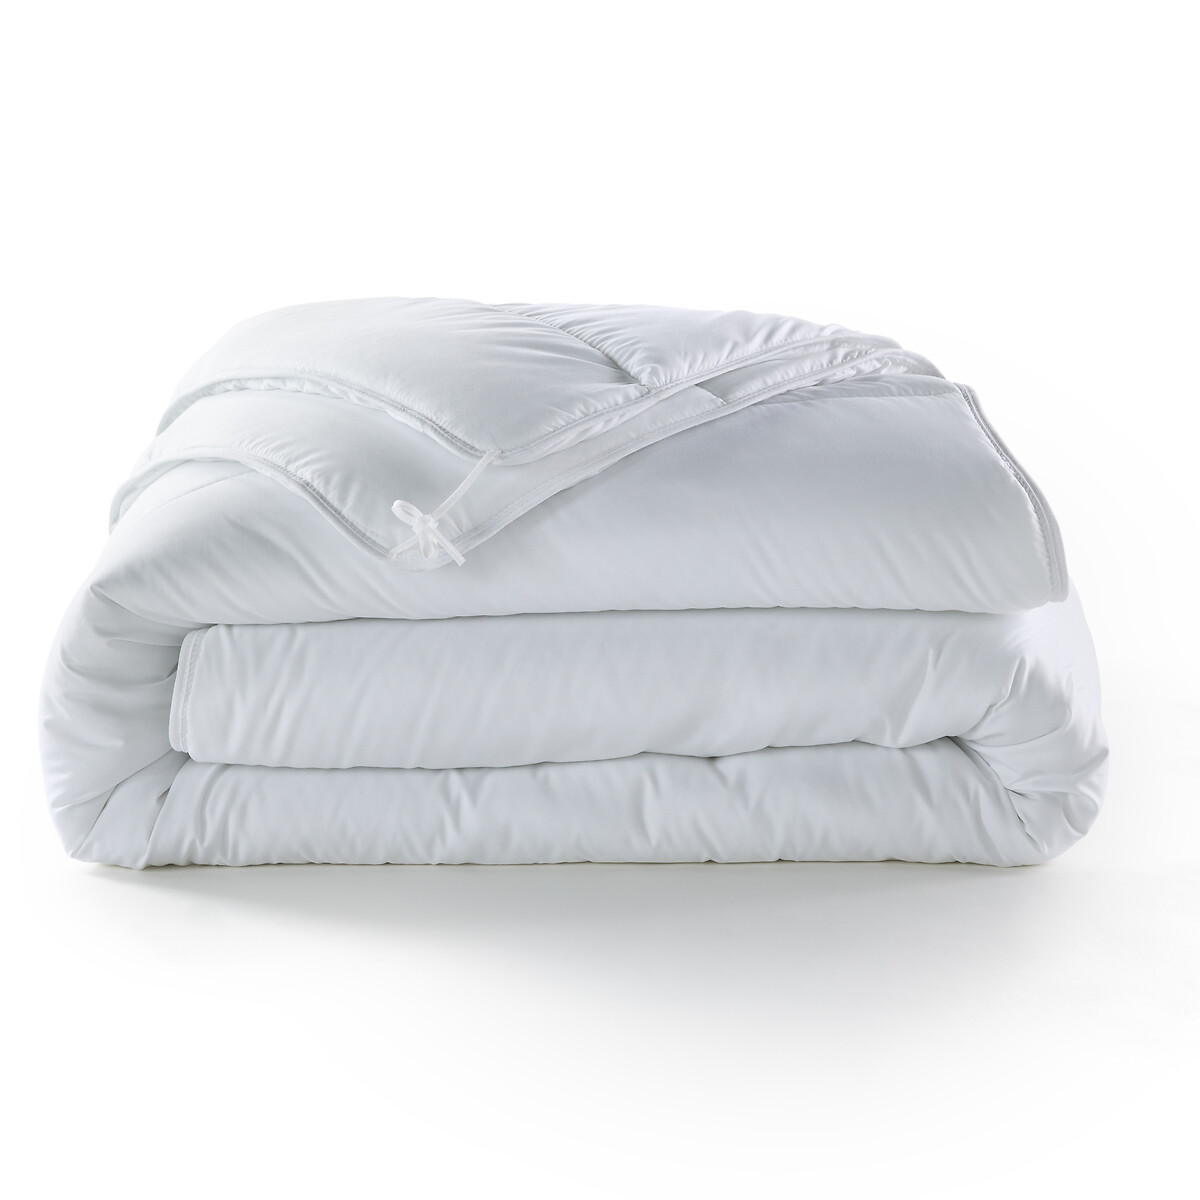 Одеяло La Redoute Синтетическое  сезона с обработкой BI-OME 260 x 240 см белый, размер 260 x 240 см - фото 2